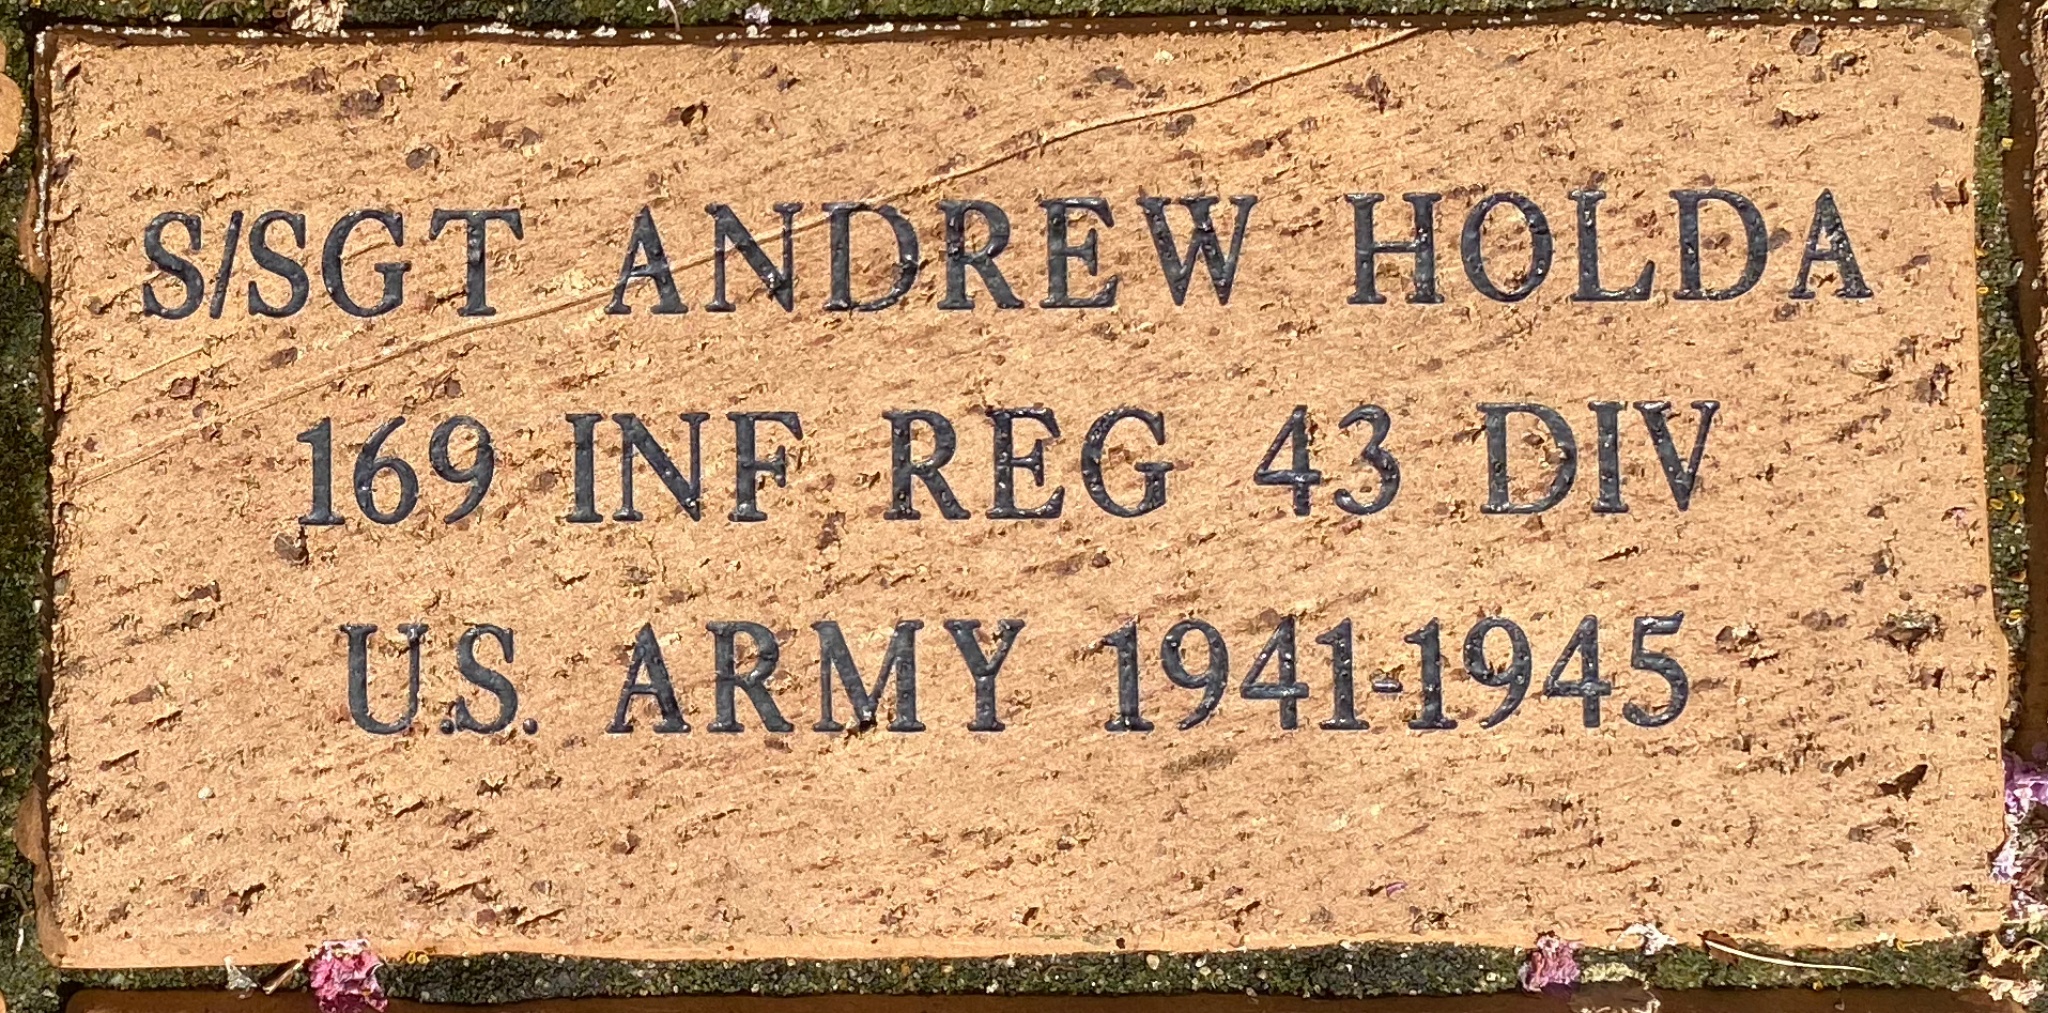 S/SGT ANDREW HOLDA 169 INF REG 43 DIV U.S. ARMY 1941-1945